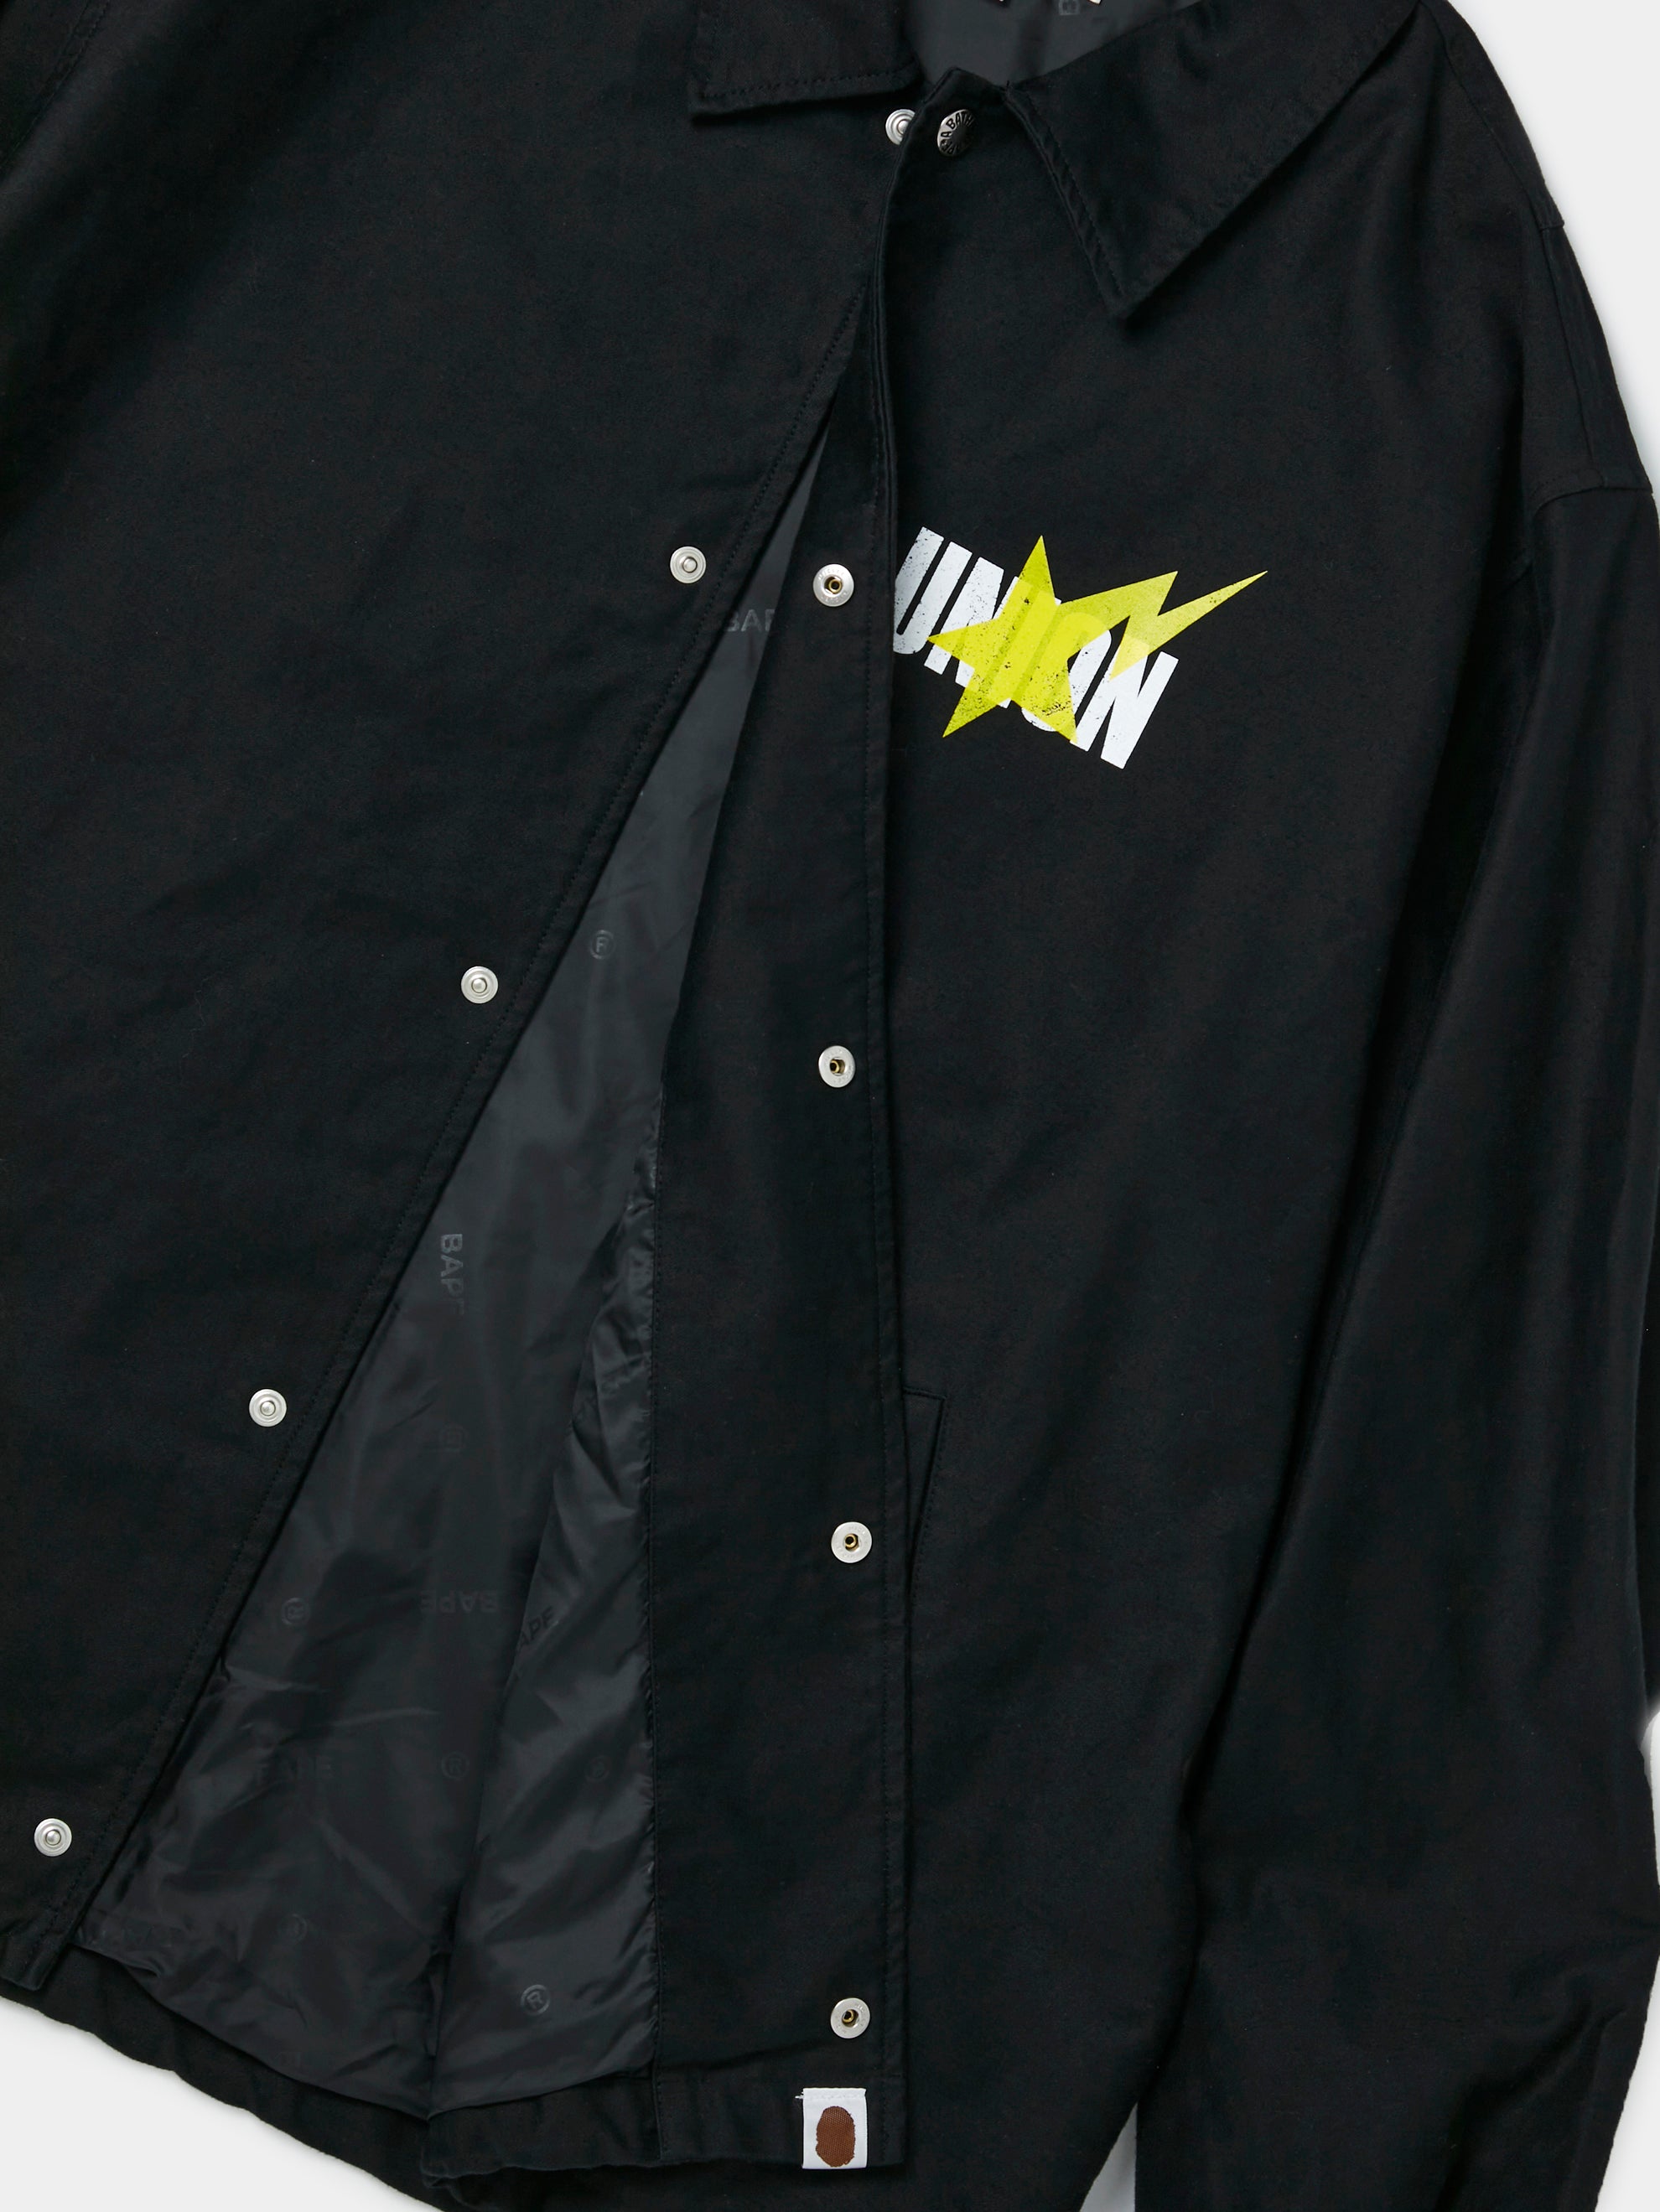 BAPE x UNION Coaches Jacket (Black)